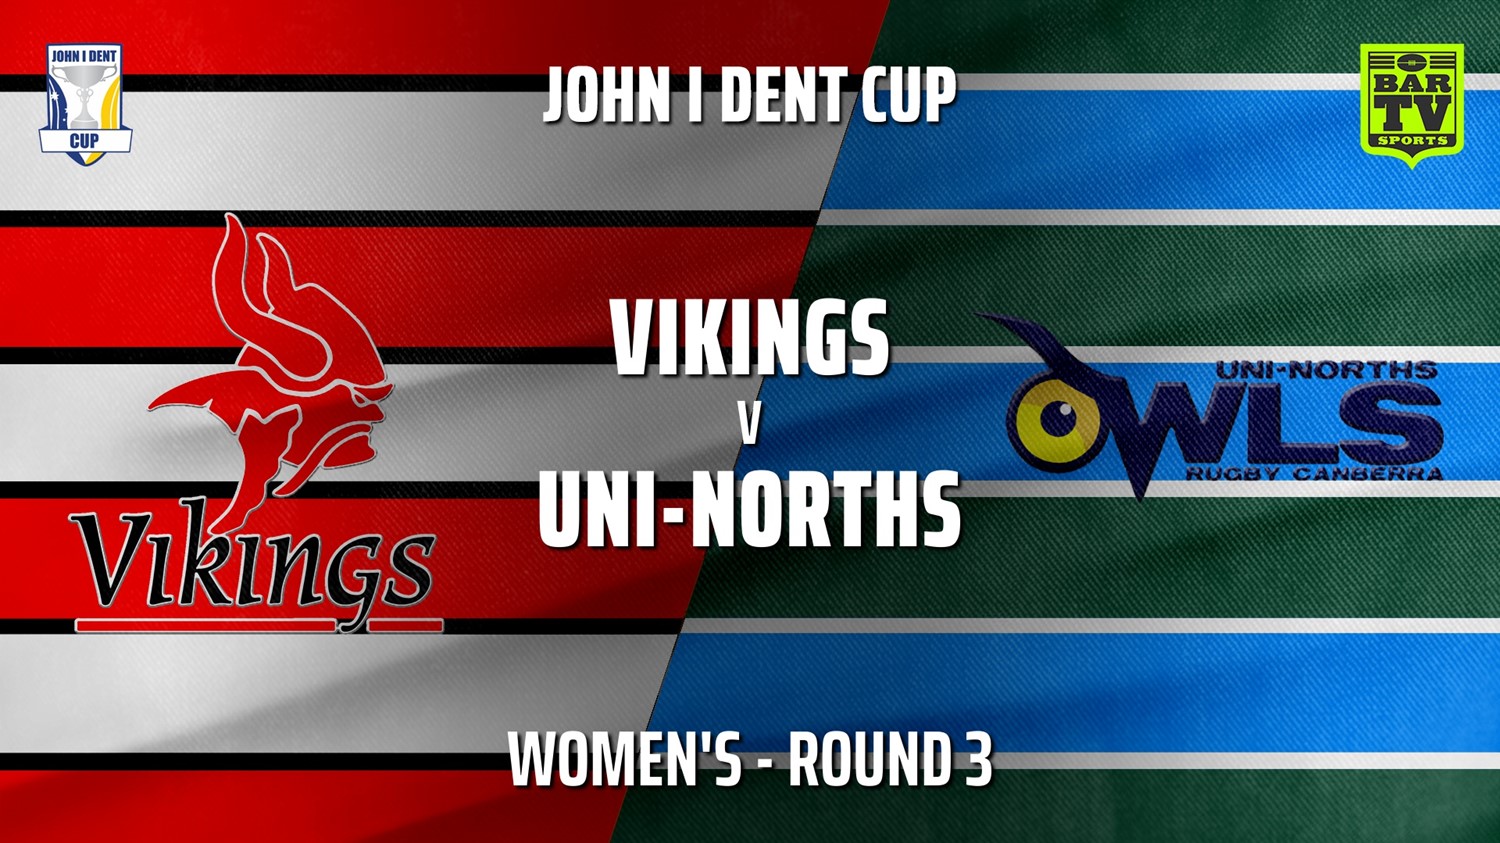 210501-John I Dent Round 3 - Women's - Tuggeranong Vikings v UNI-Norths Minigame Slate Image